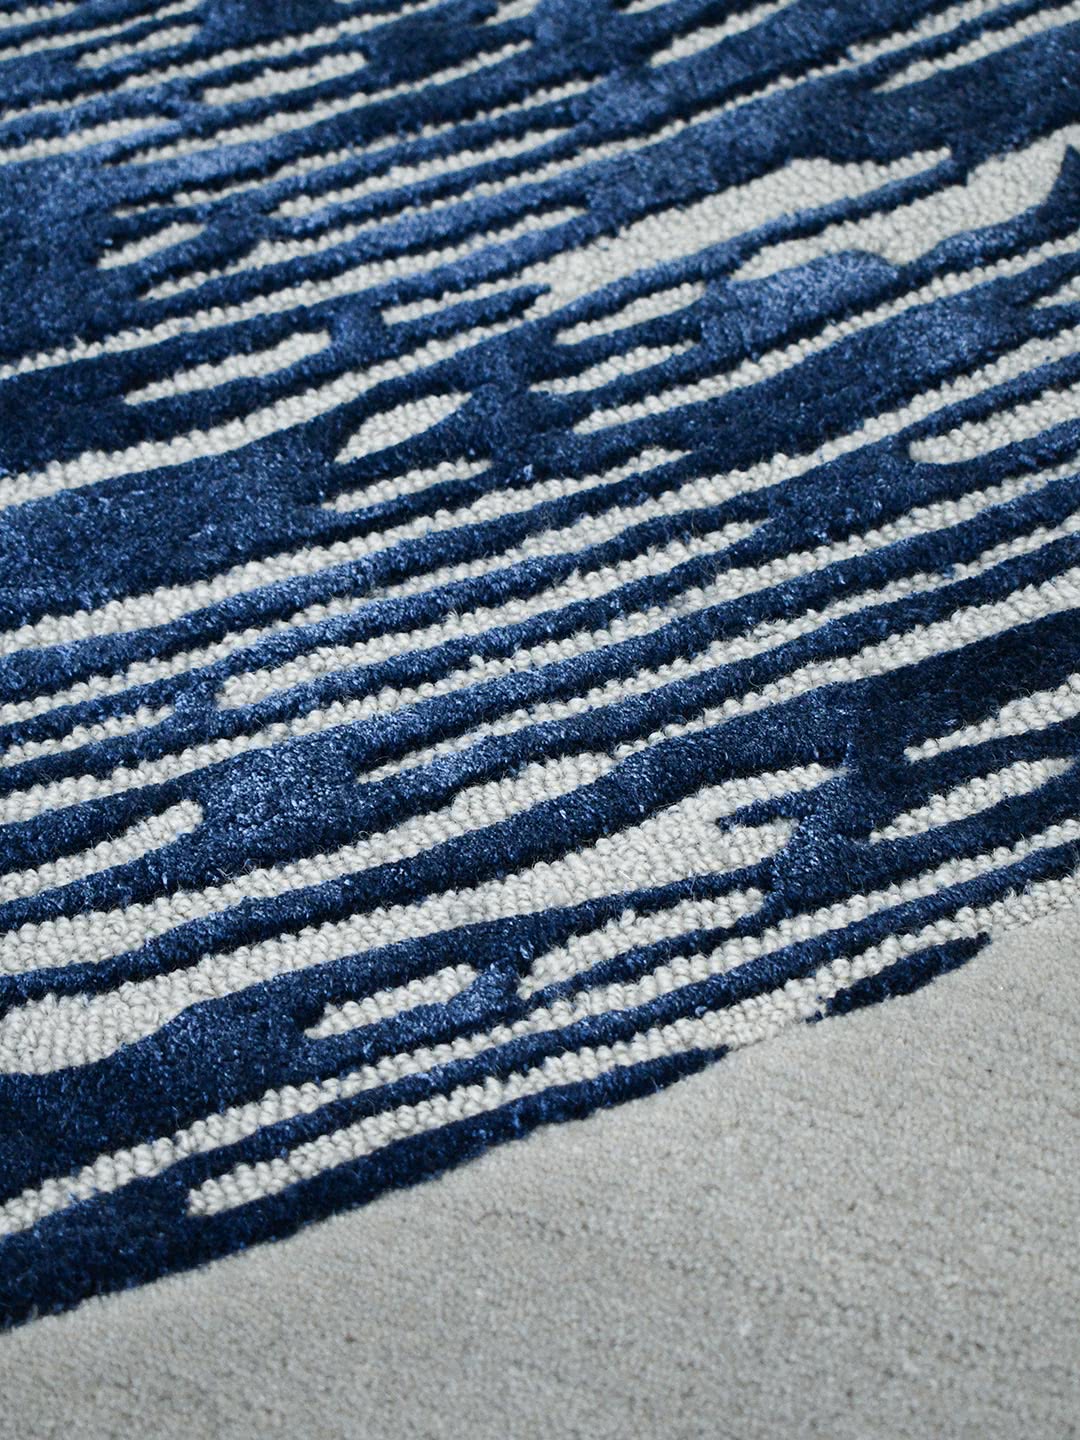 Niagara Denim organic lines textured rug in navy blue and grey